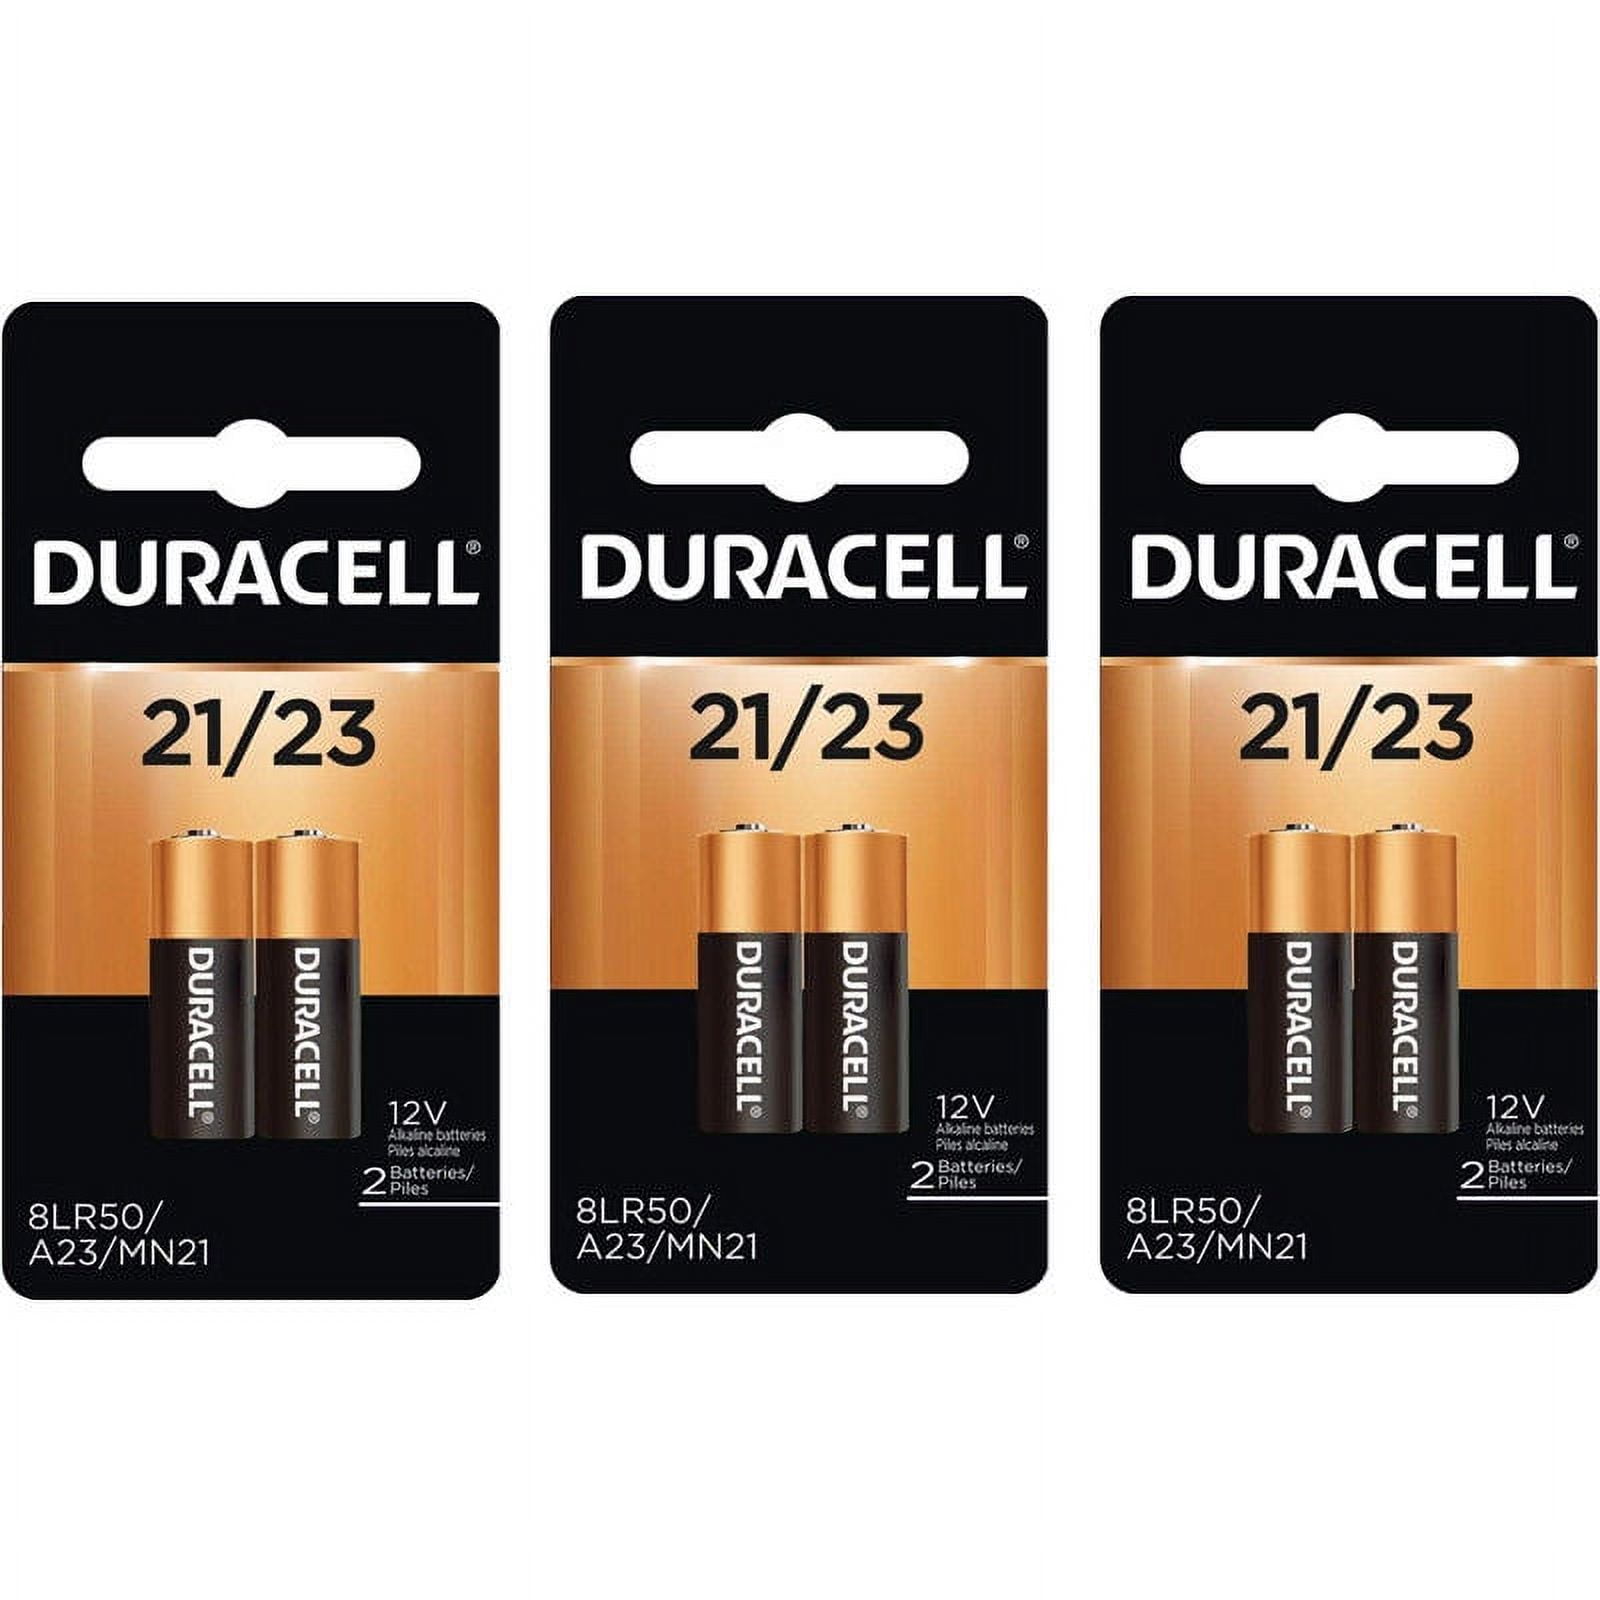 Duracell A23 Batteries 12V Alkaline 23A, A23BP, GP23, MN21, 21/23